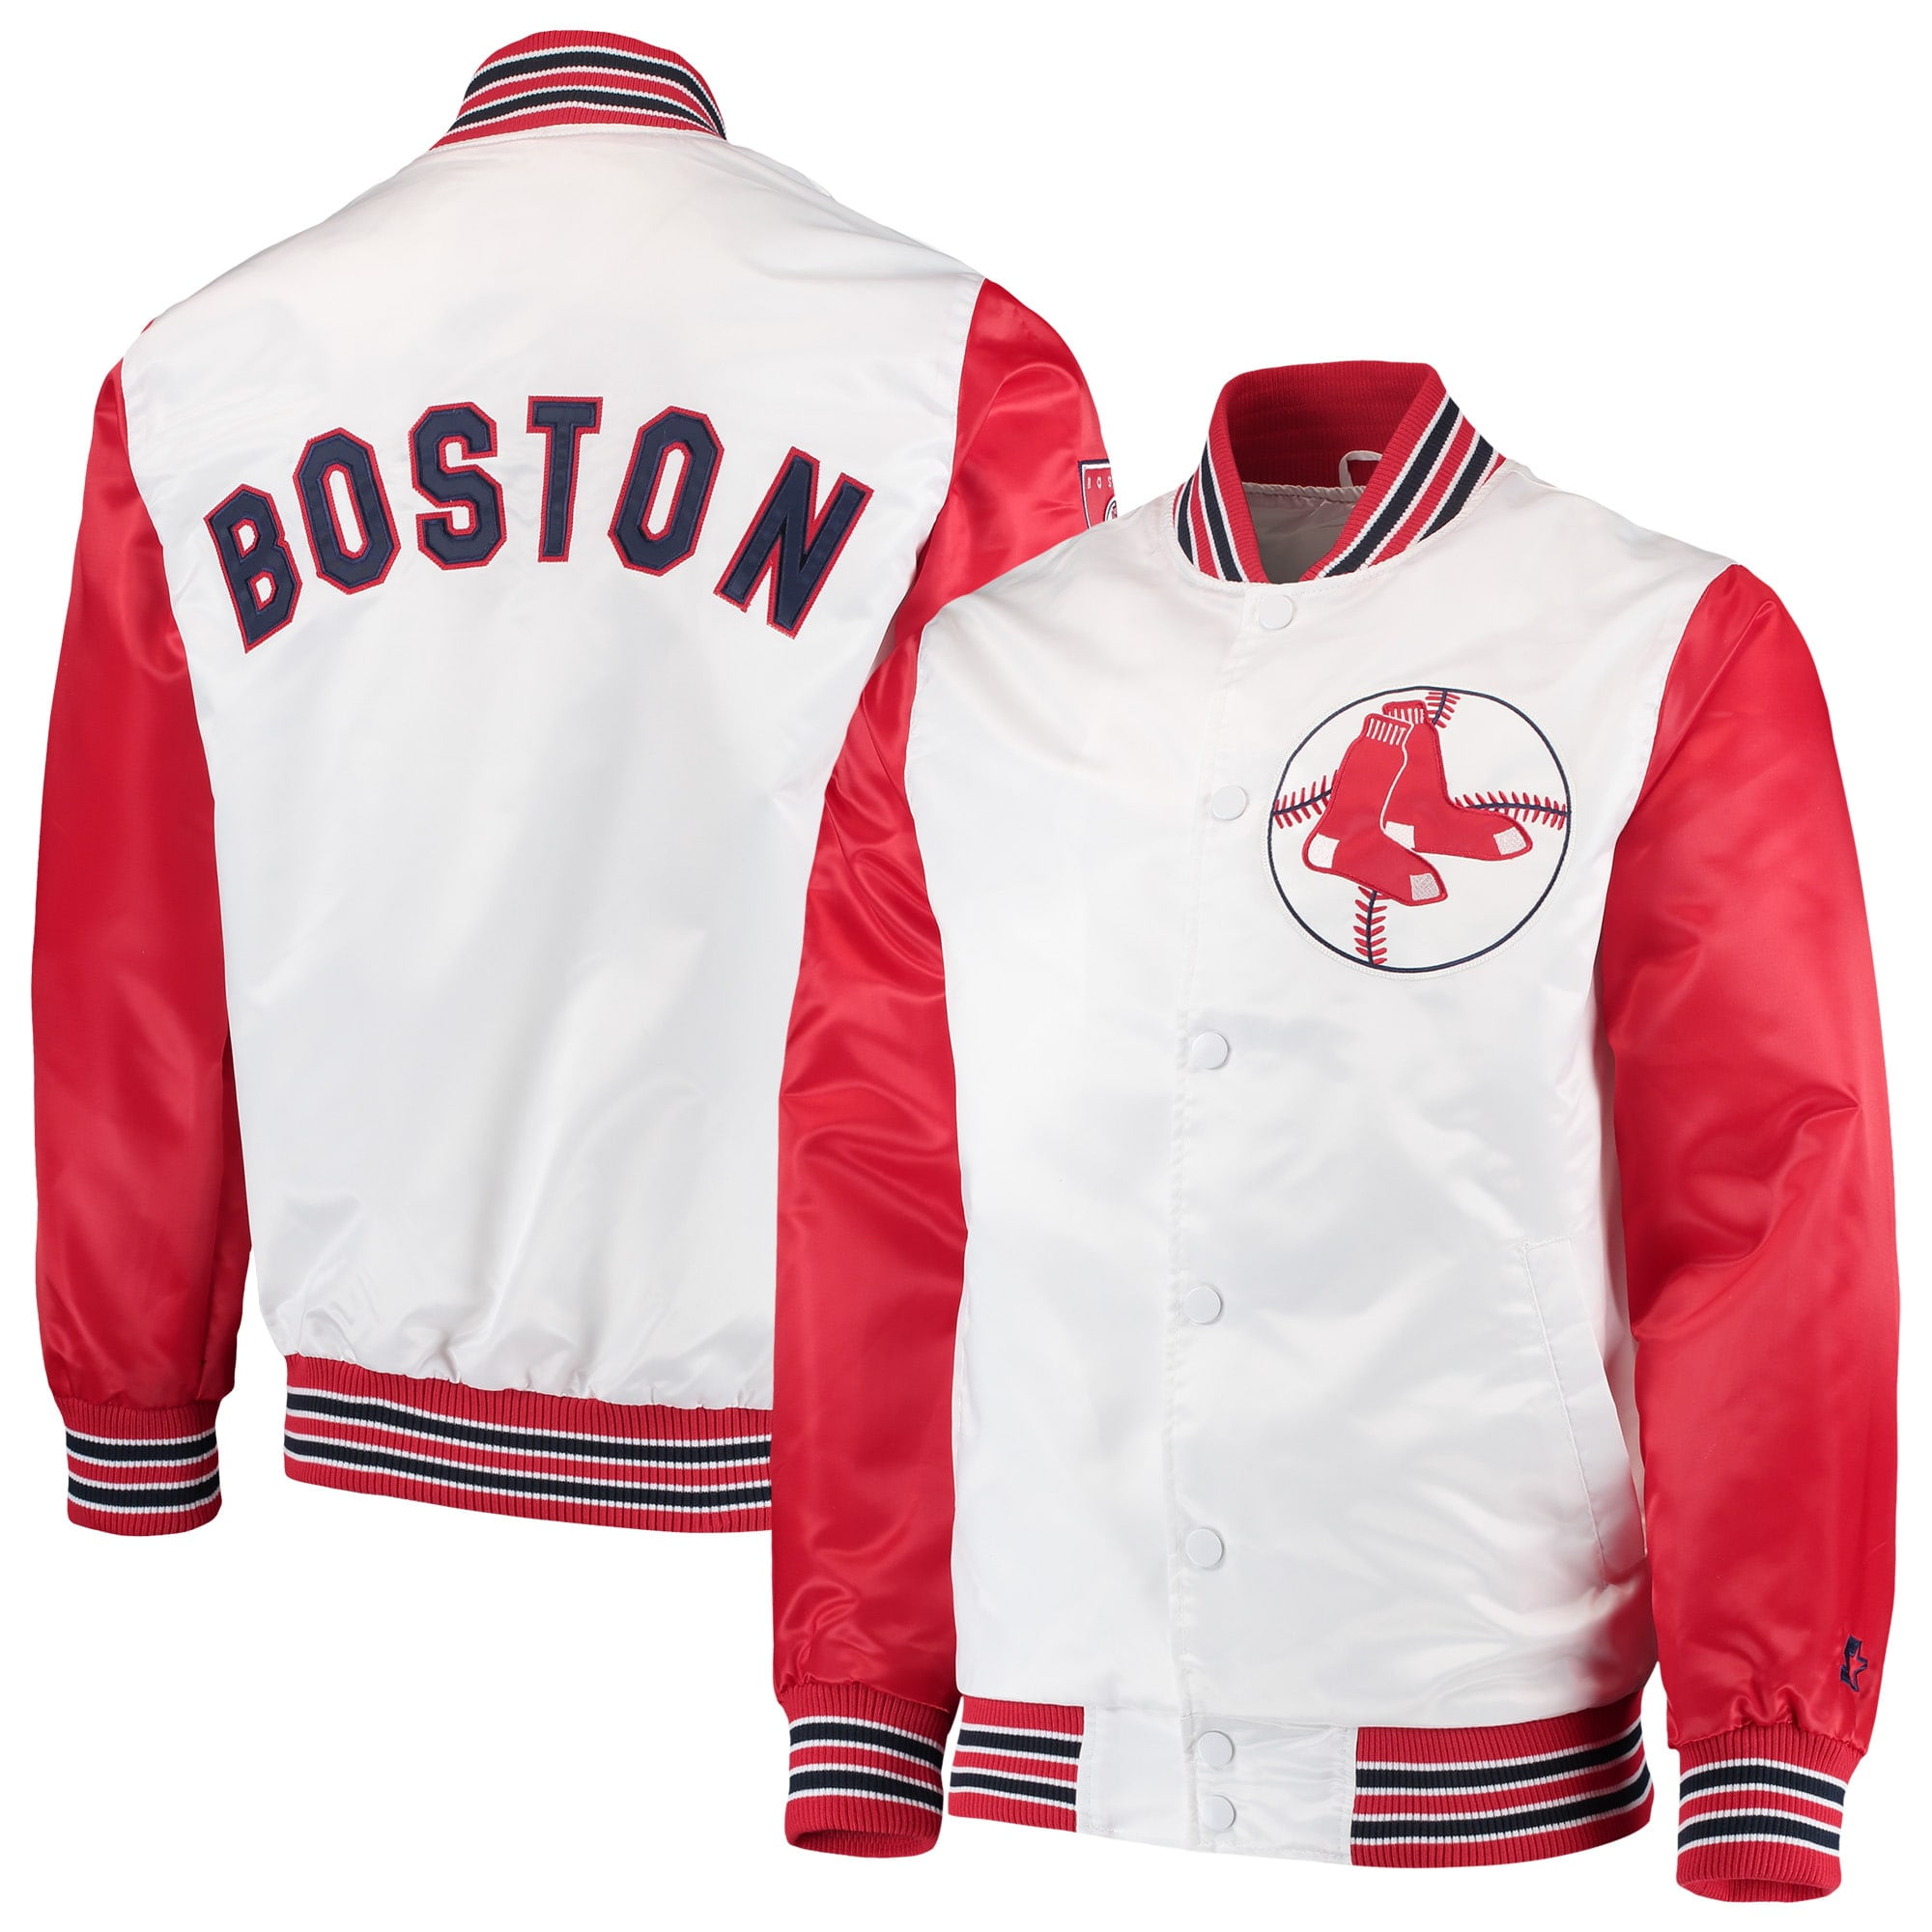 Boston Red Sox Starter The Legend Jacket - White/Red - Walmart.com ...